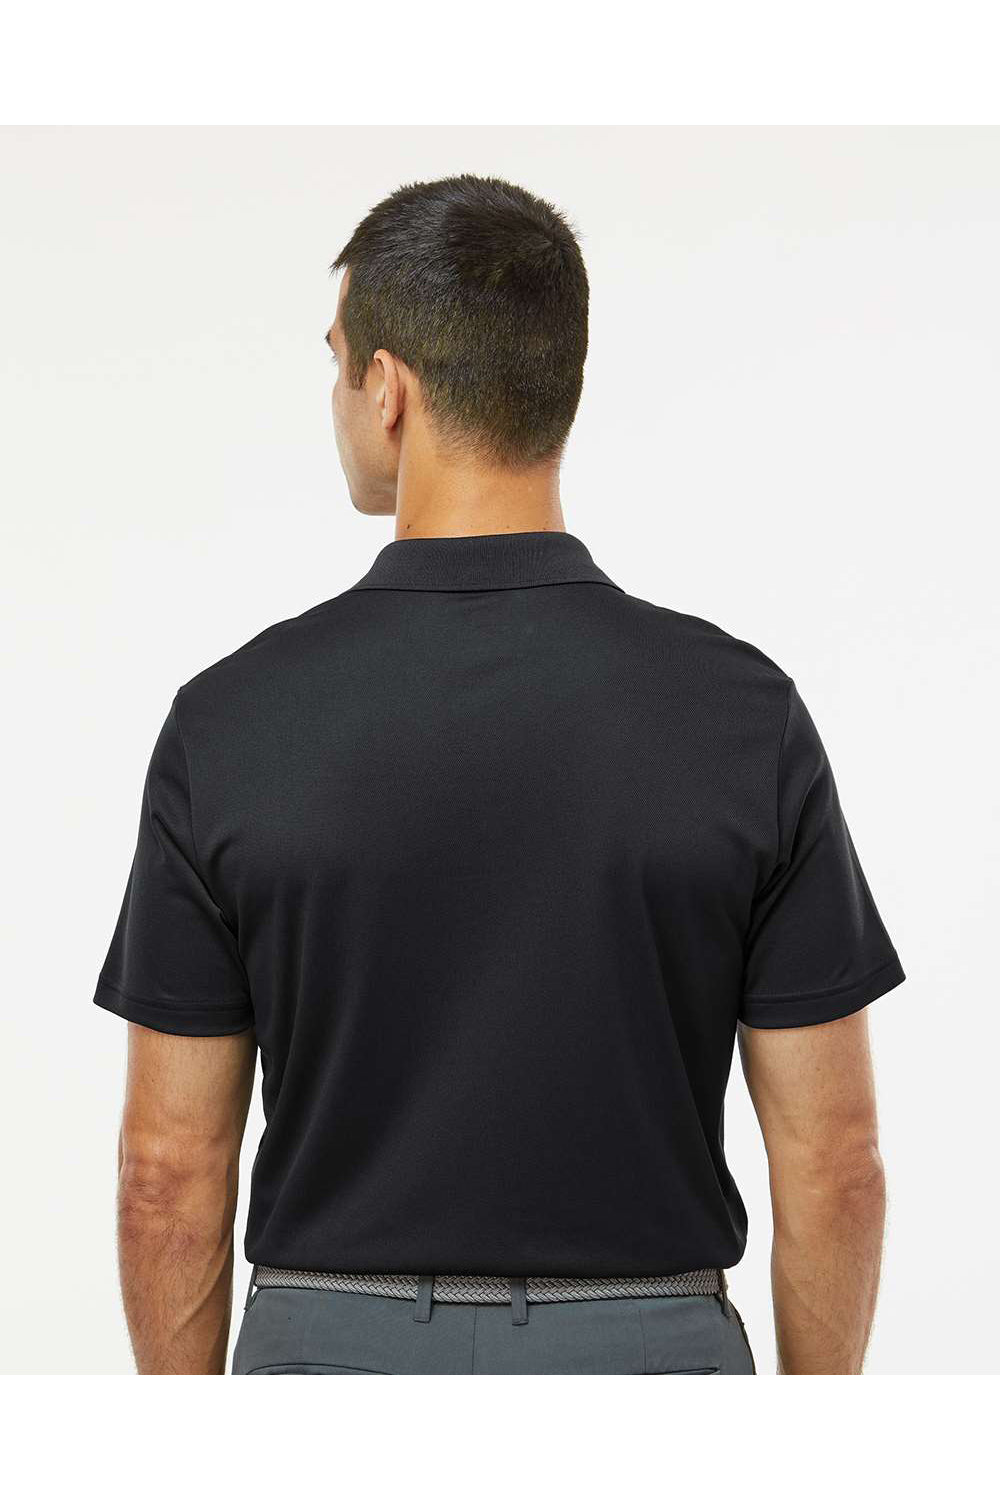 Adidas A430 Mens Basic Short Sleeve Polo Shirt Black Model Back